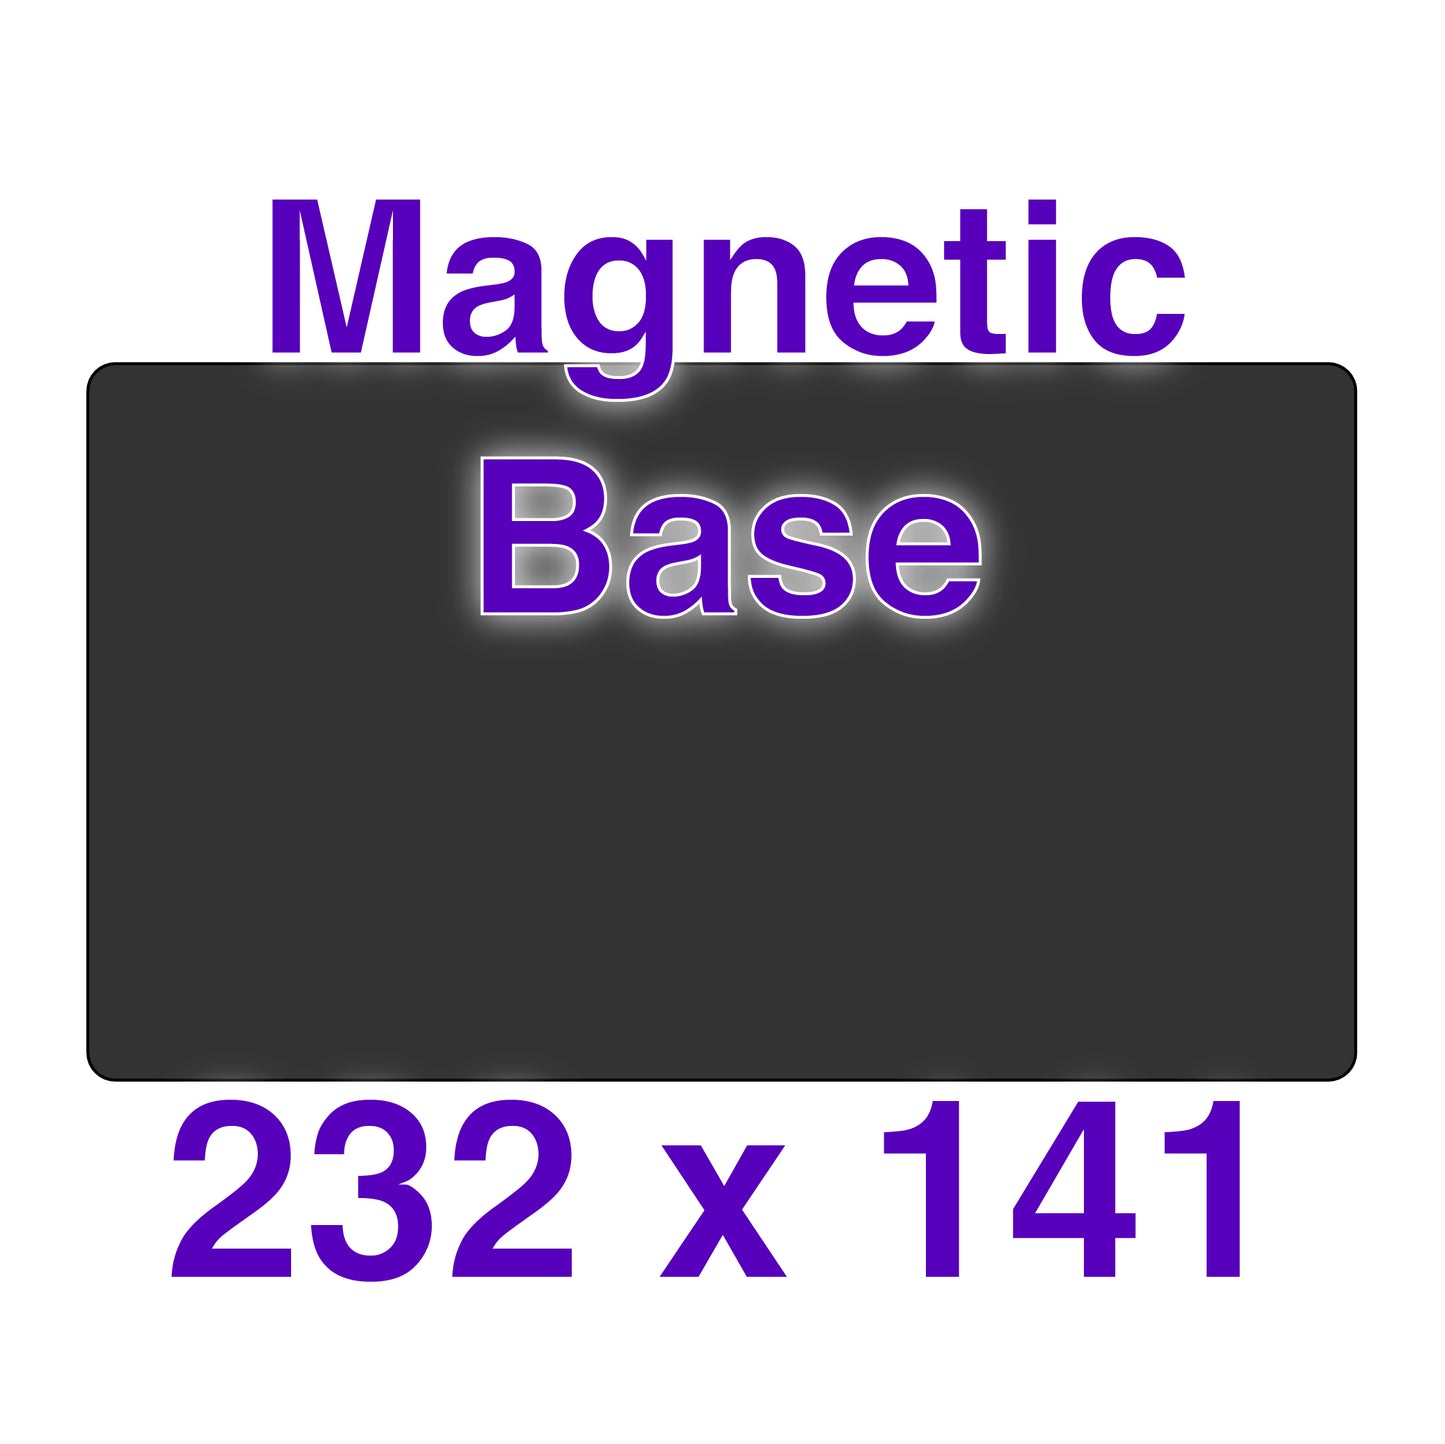 Magnetic Base - 232 x 141